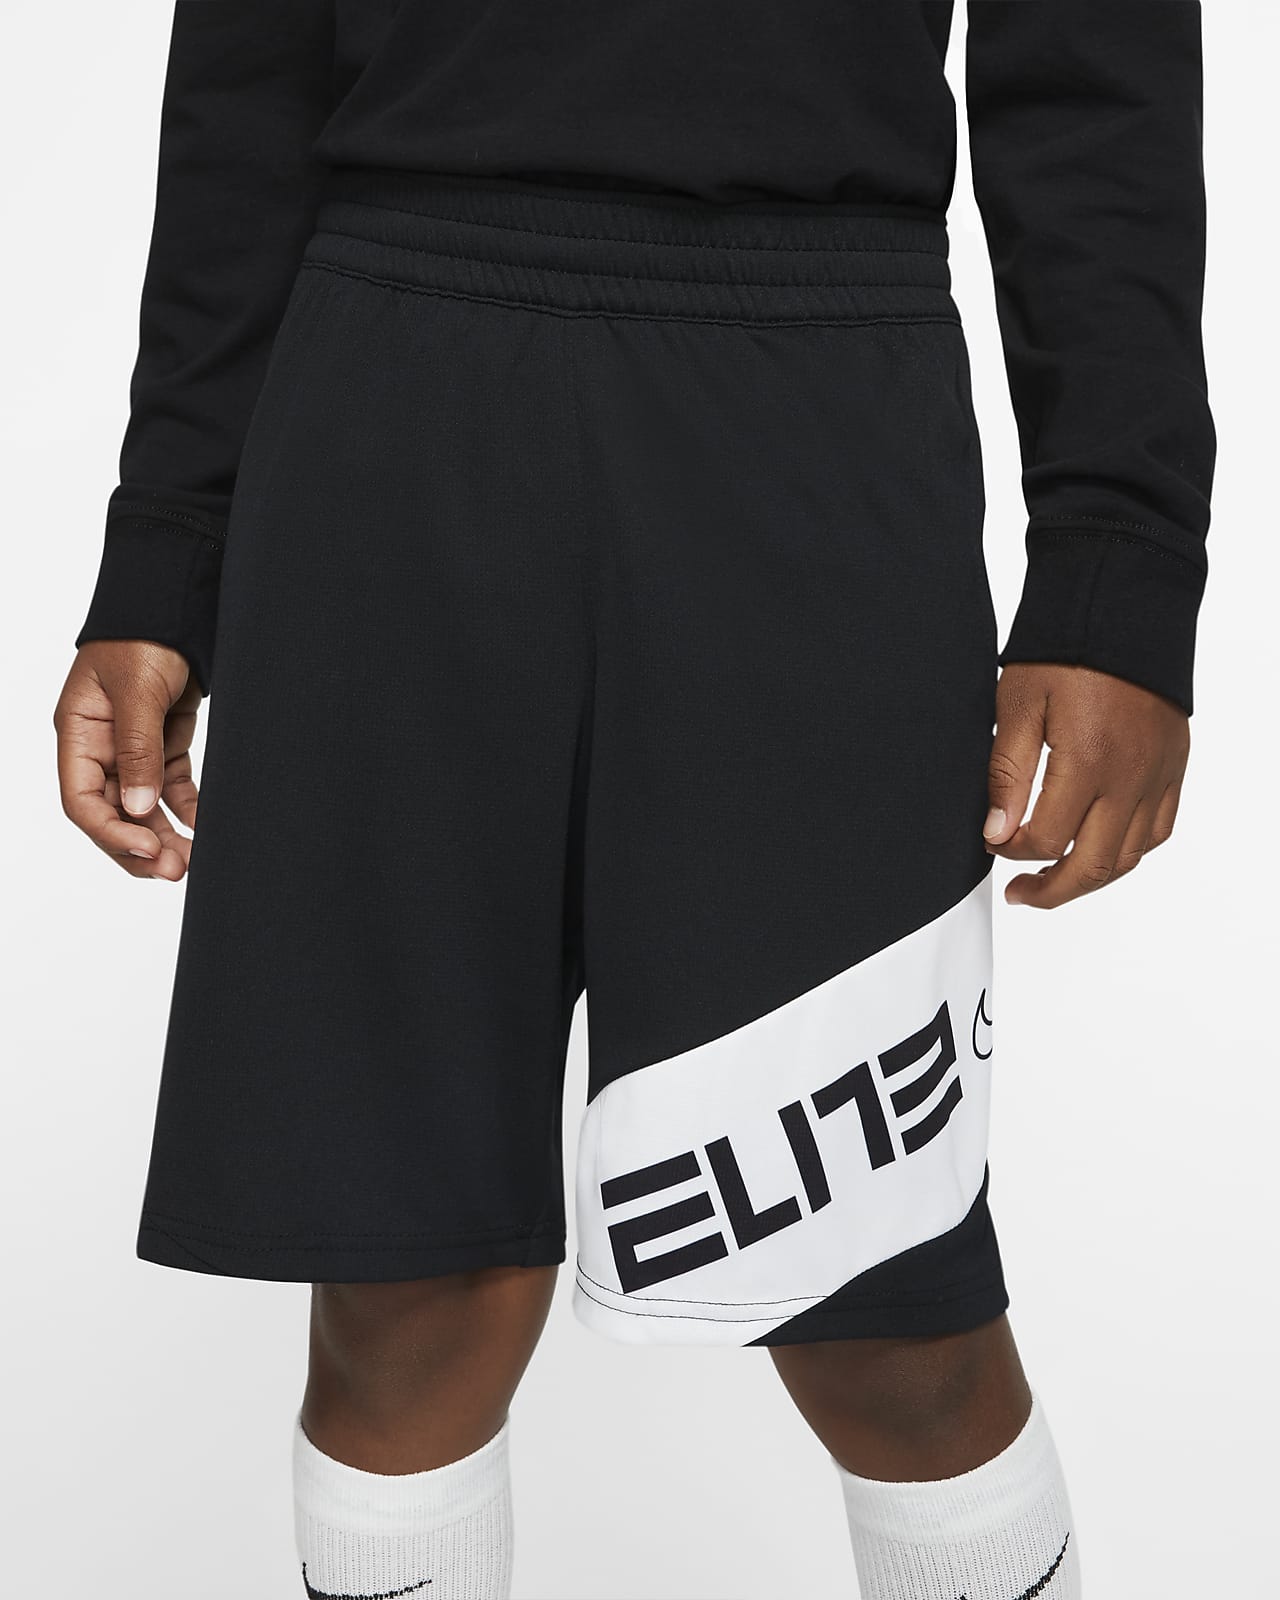 basketball shorts nike elite